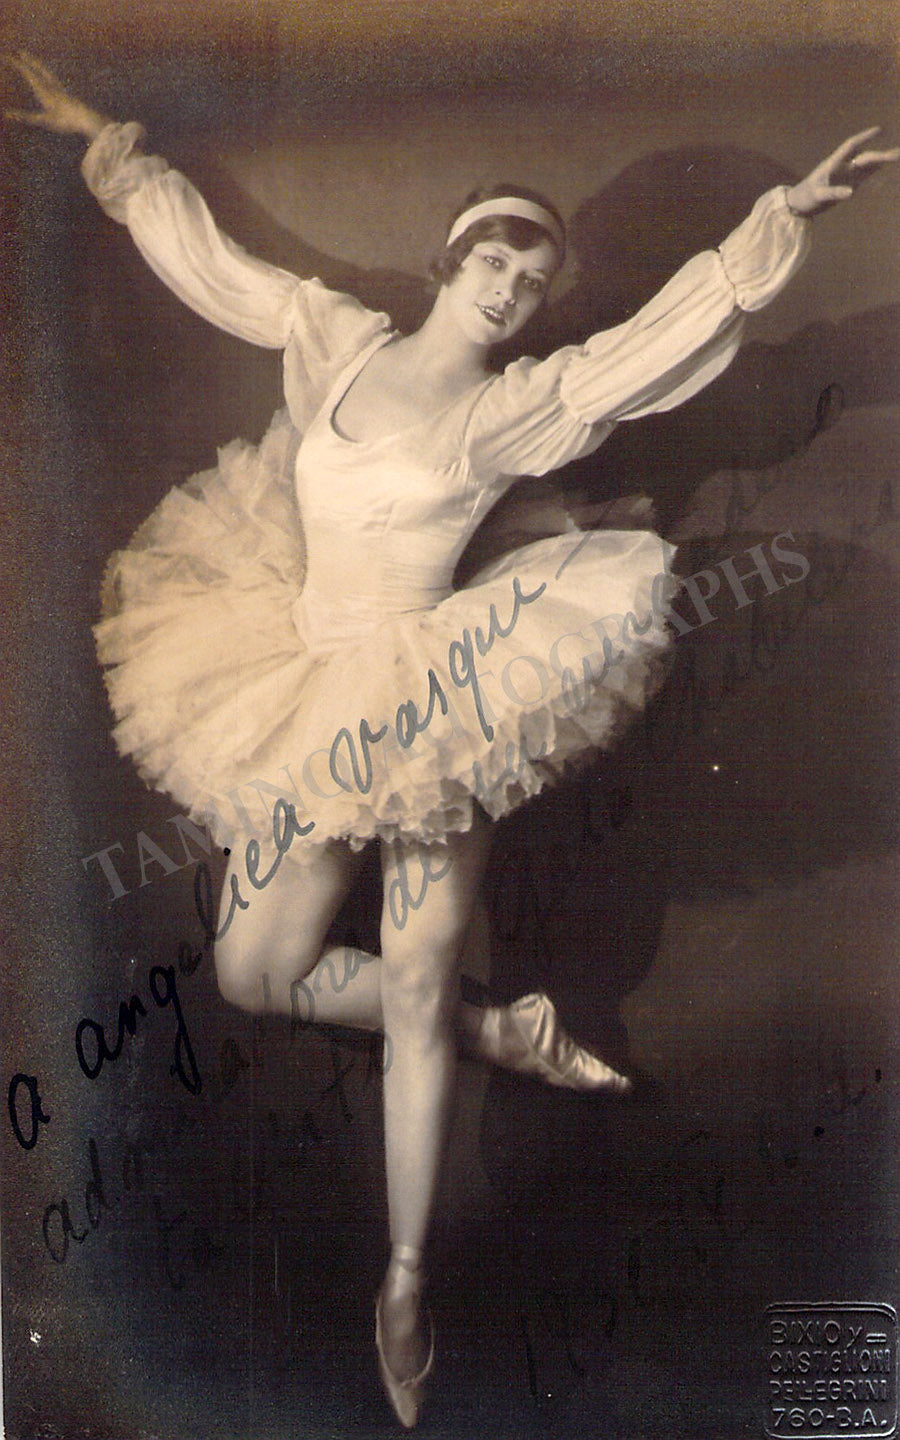 Chabelska, Gala - Signed Photograph 1930